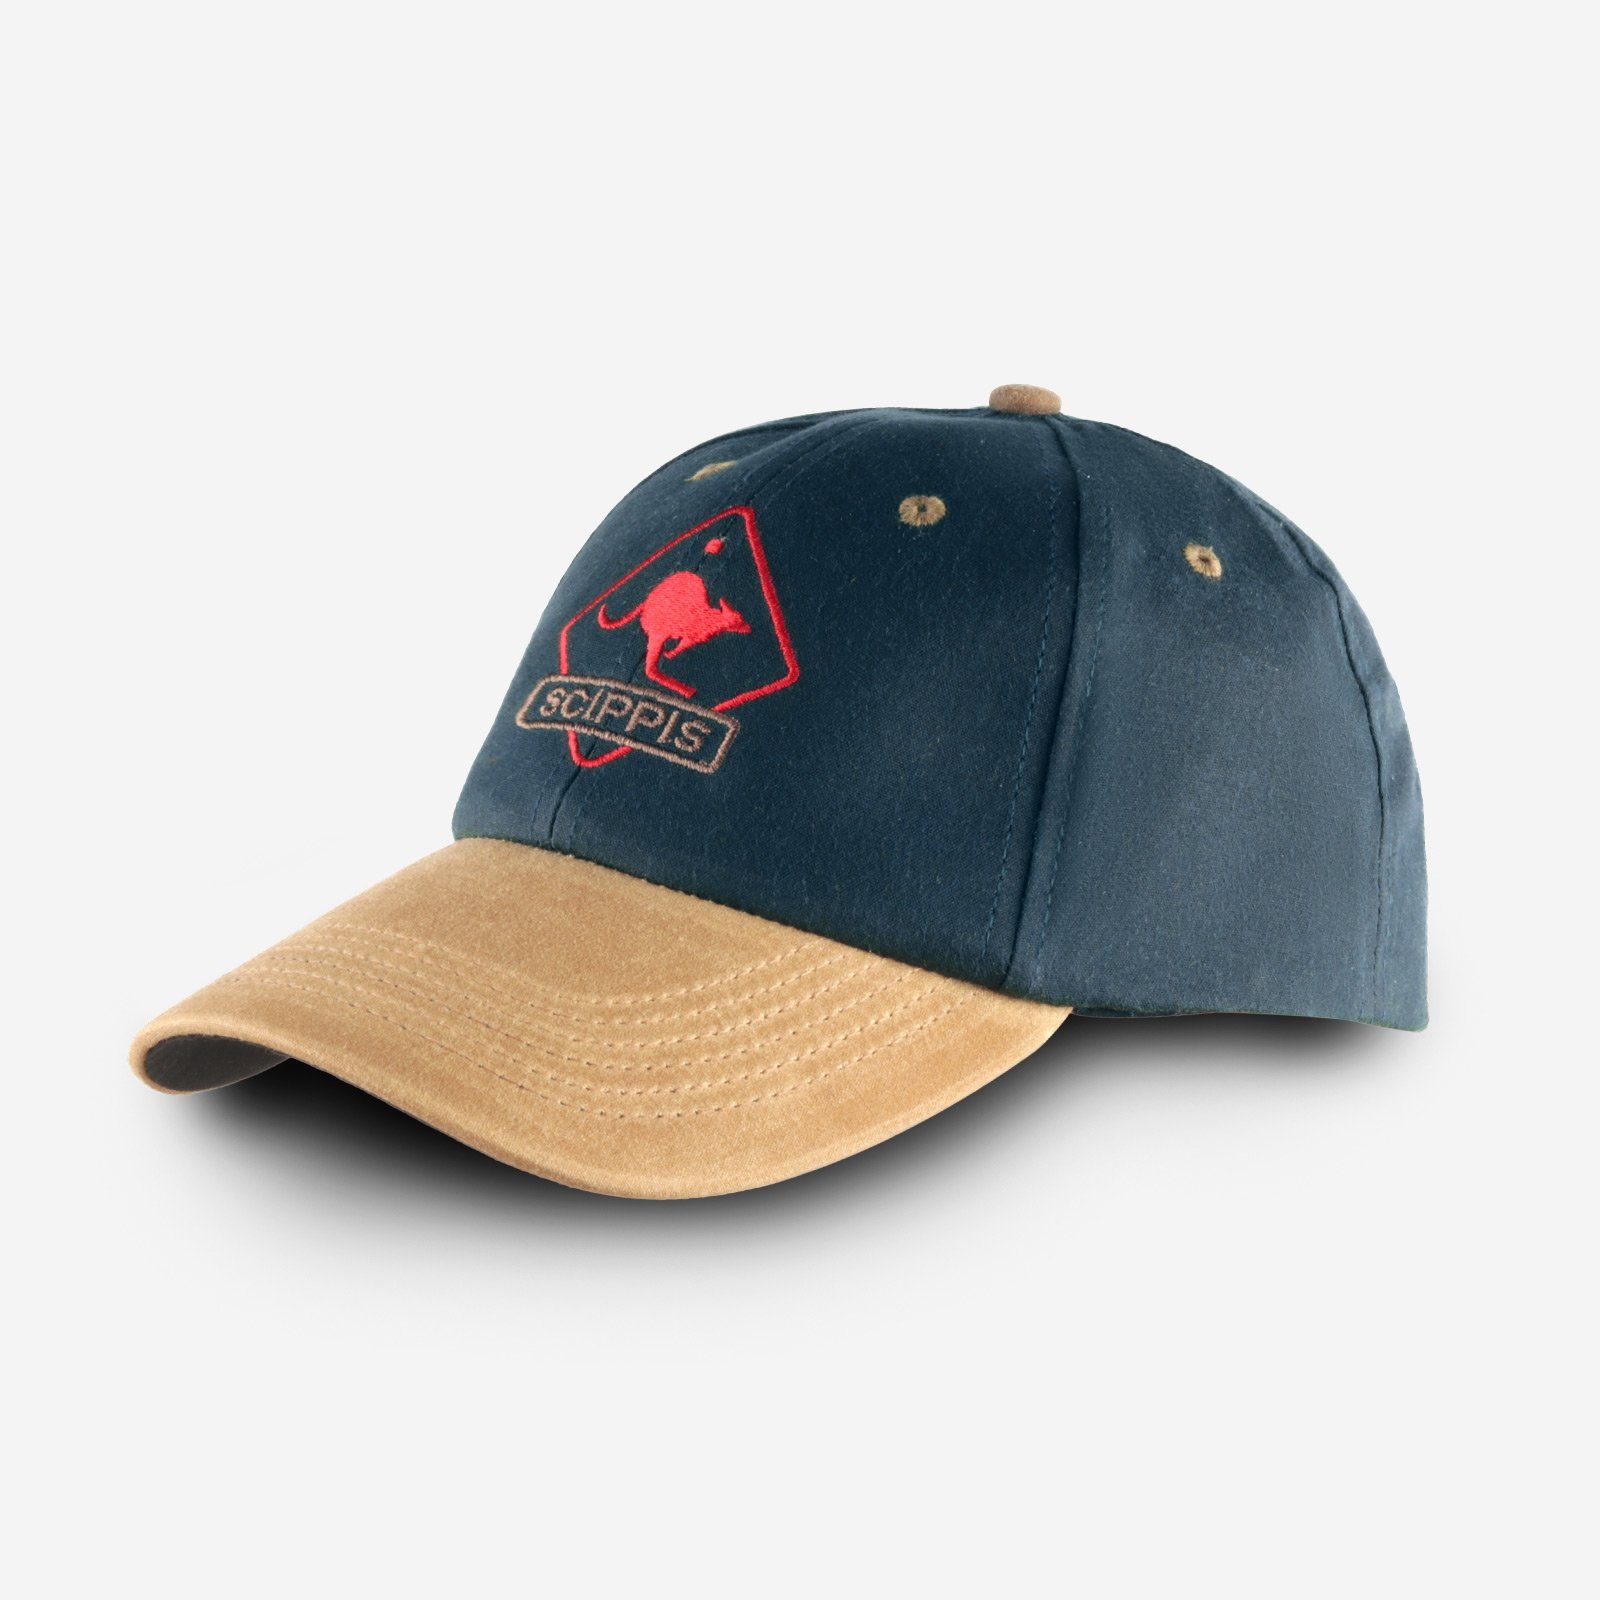 Scippis Baseball Cap OILSKIN CAP Extrem wasserabweisend, windundurchlässig atmungsaktiv tan/navy